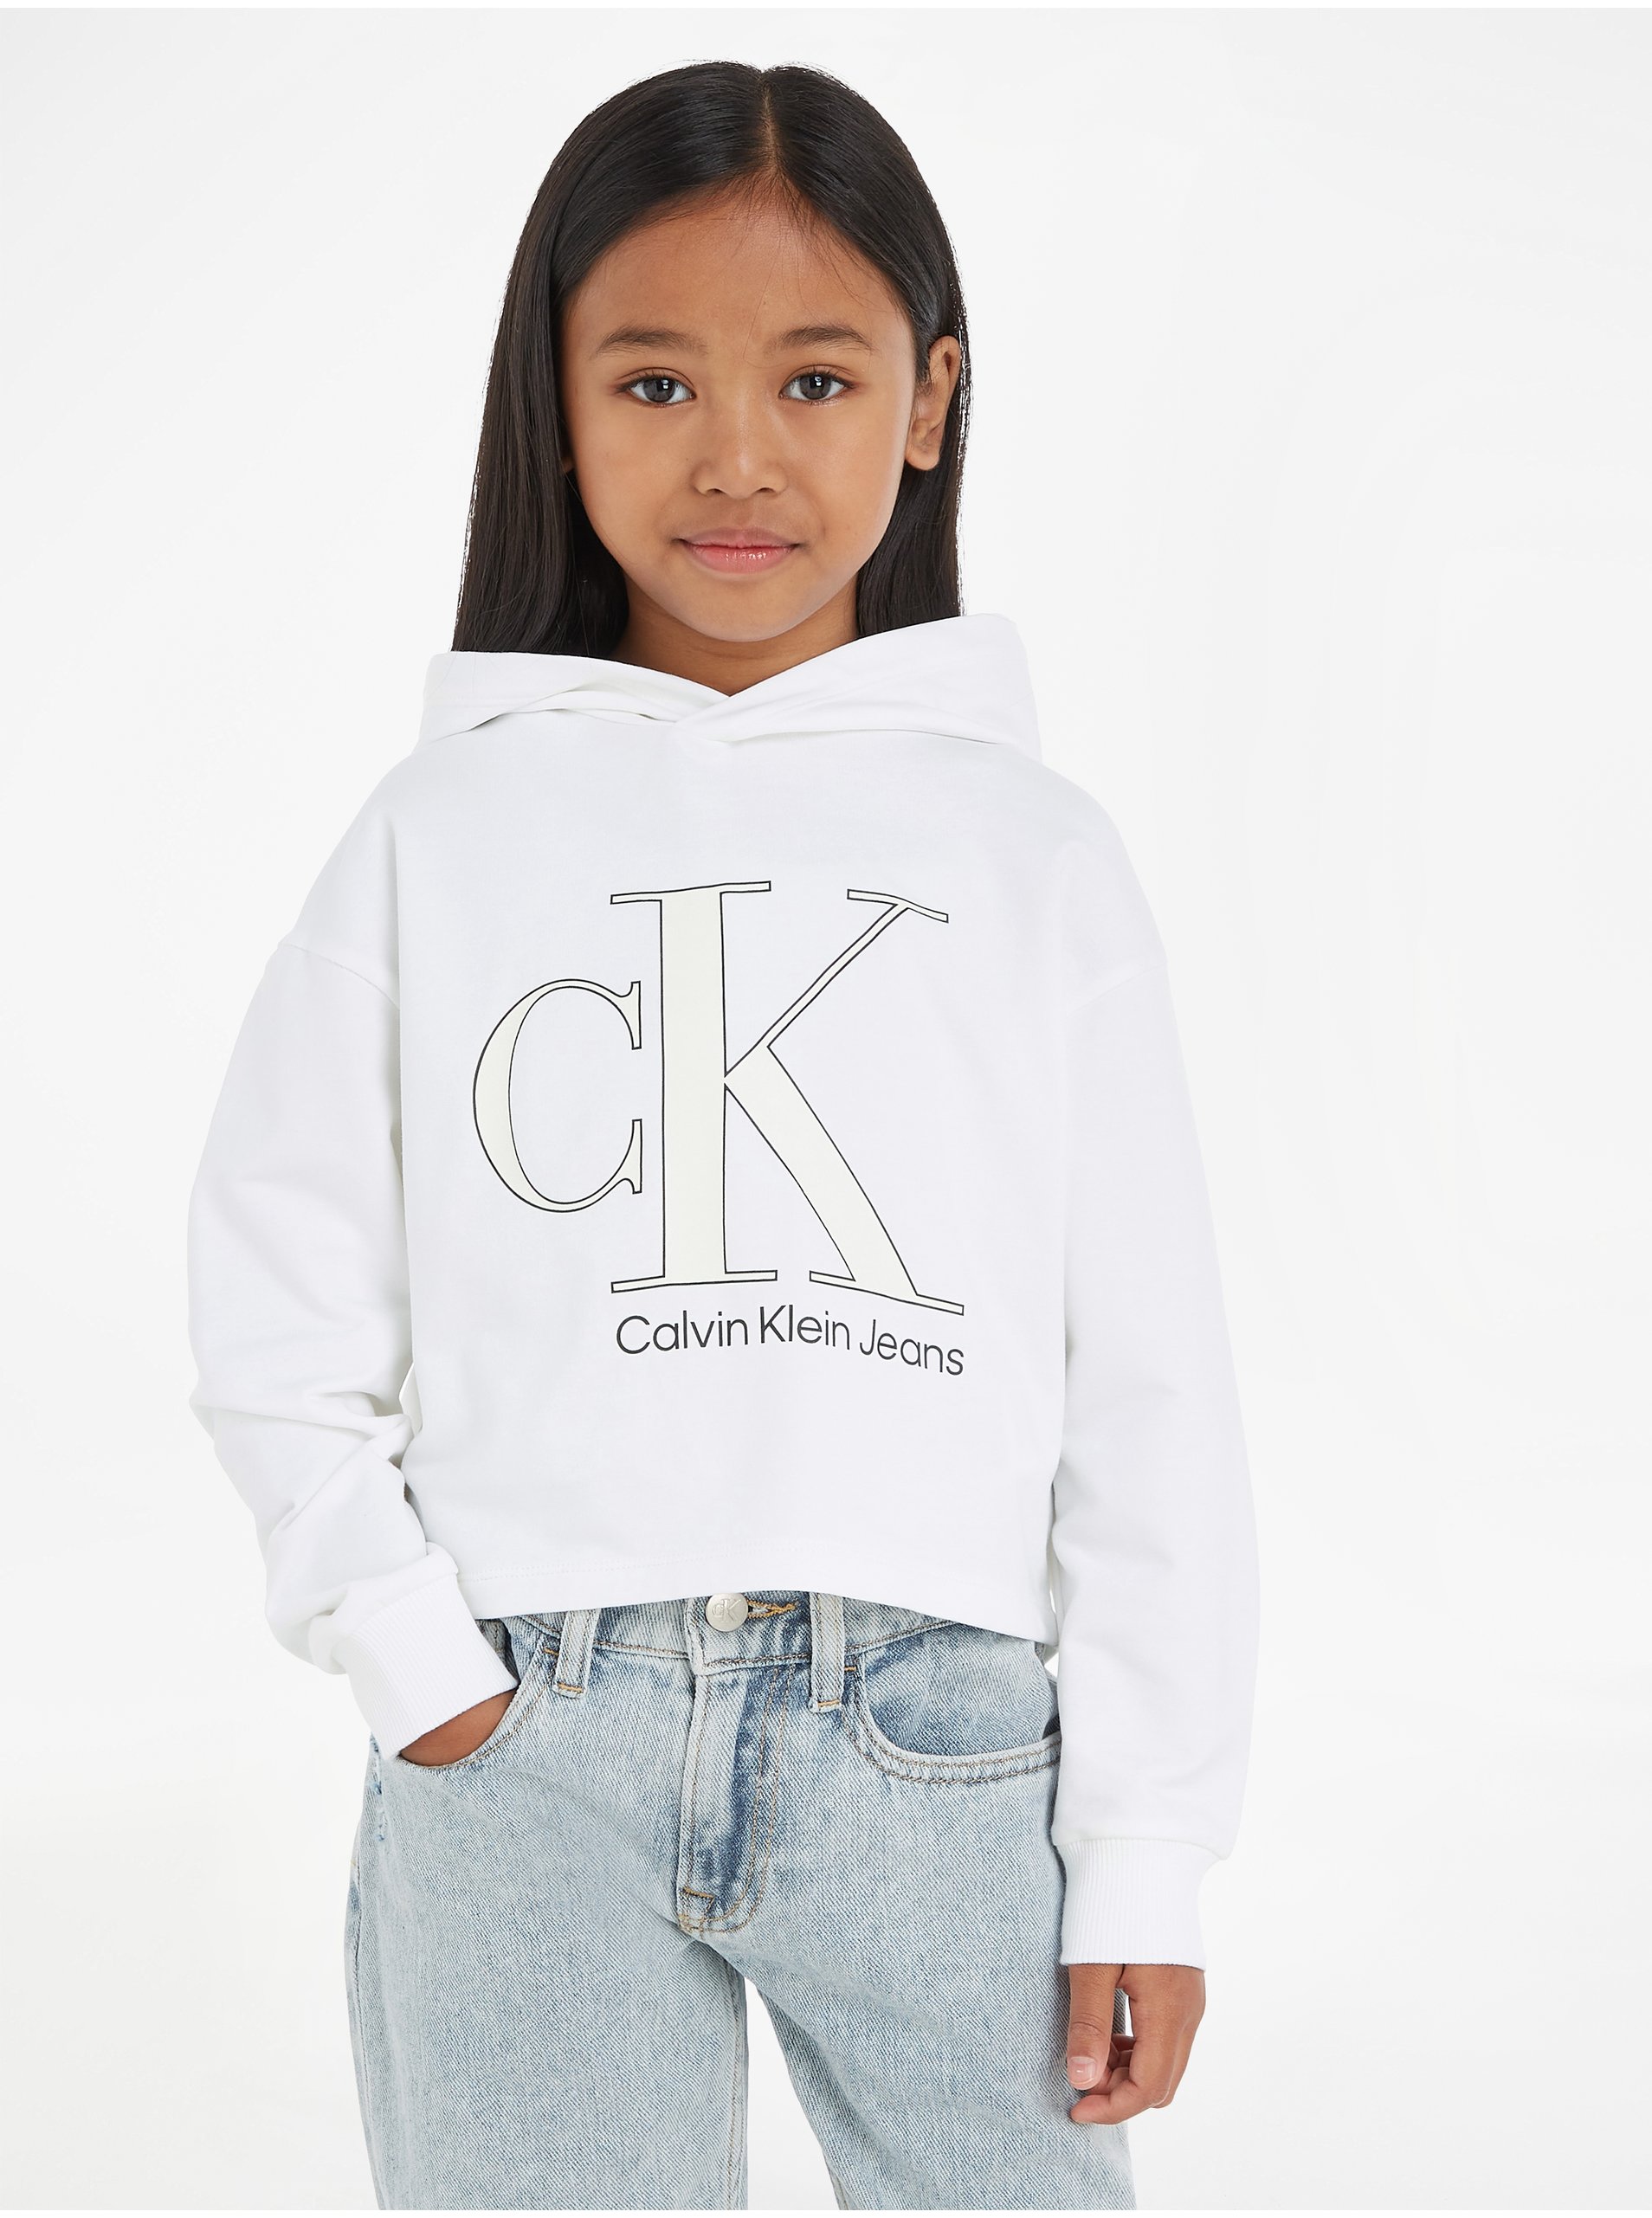 E-shop Bílá holčičí crop top mikina Calvin Klein Jeans